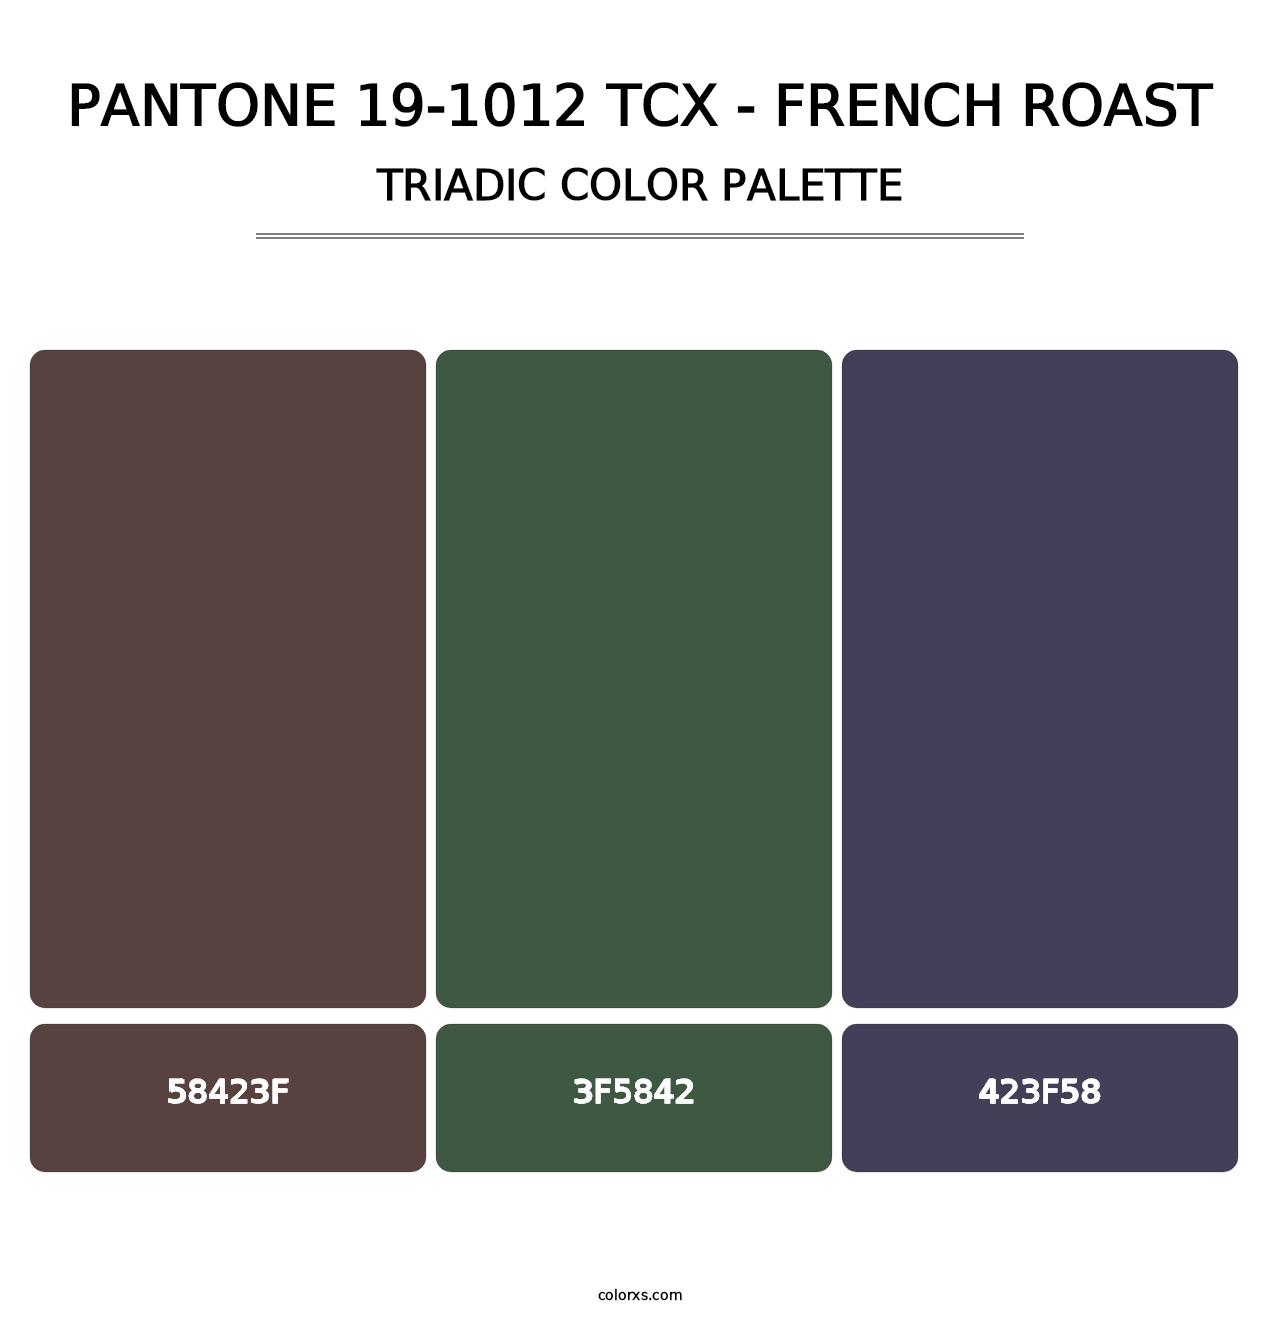 PANTONE 19-1012 TCX - French Roast - Triadic Color Palette